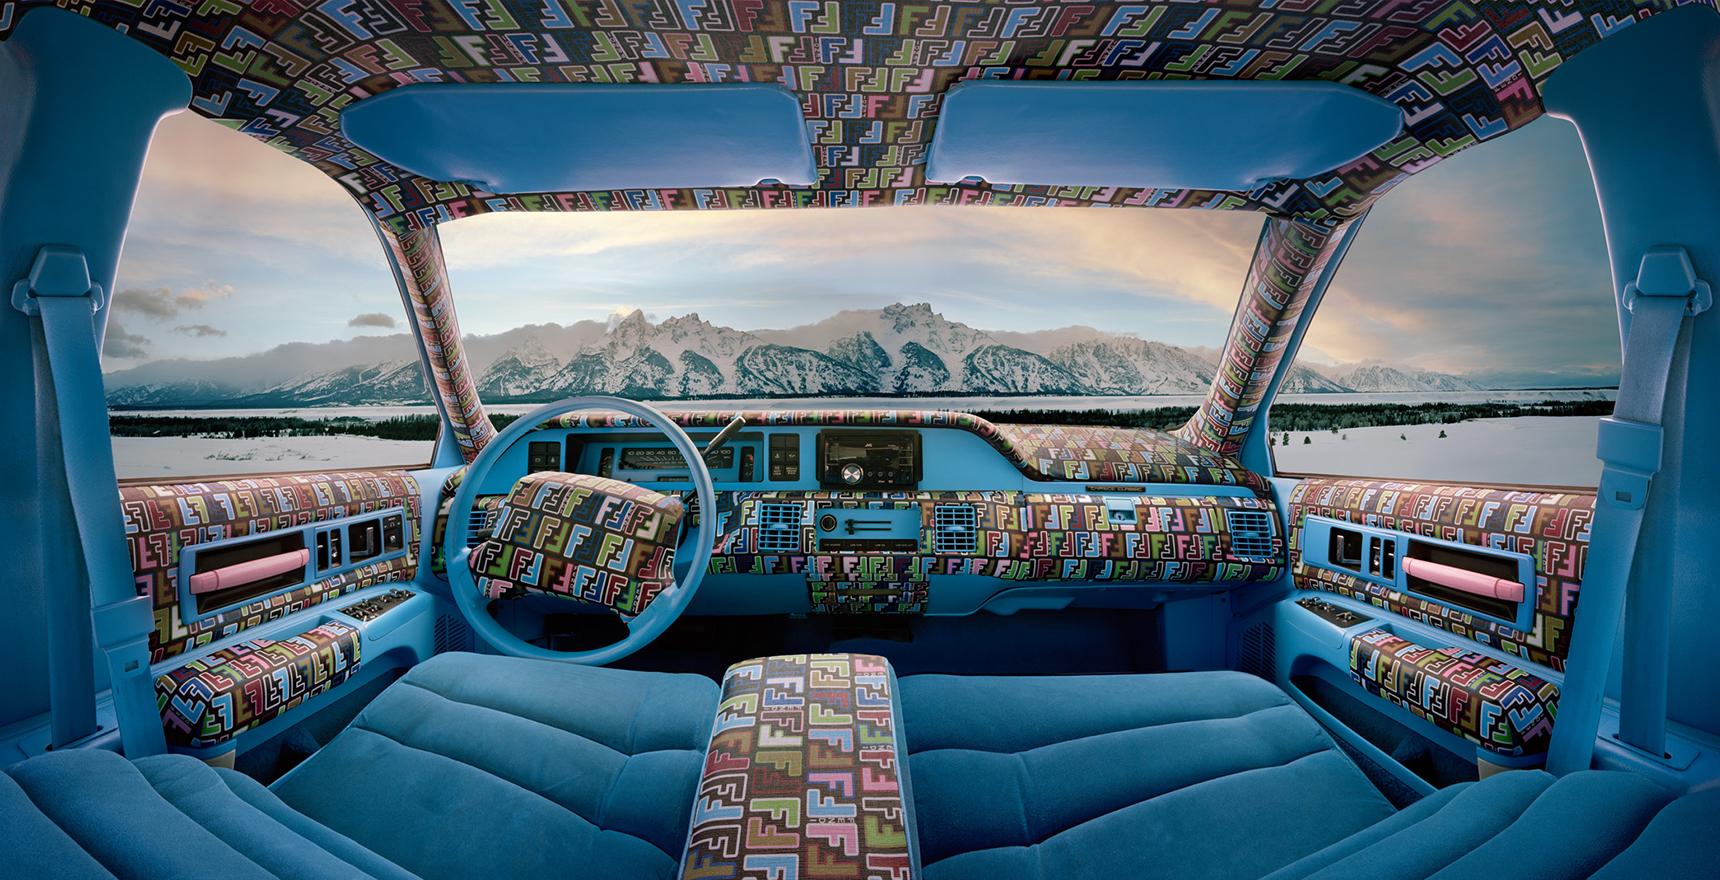 eccentric fabric print vehicle interior